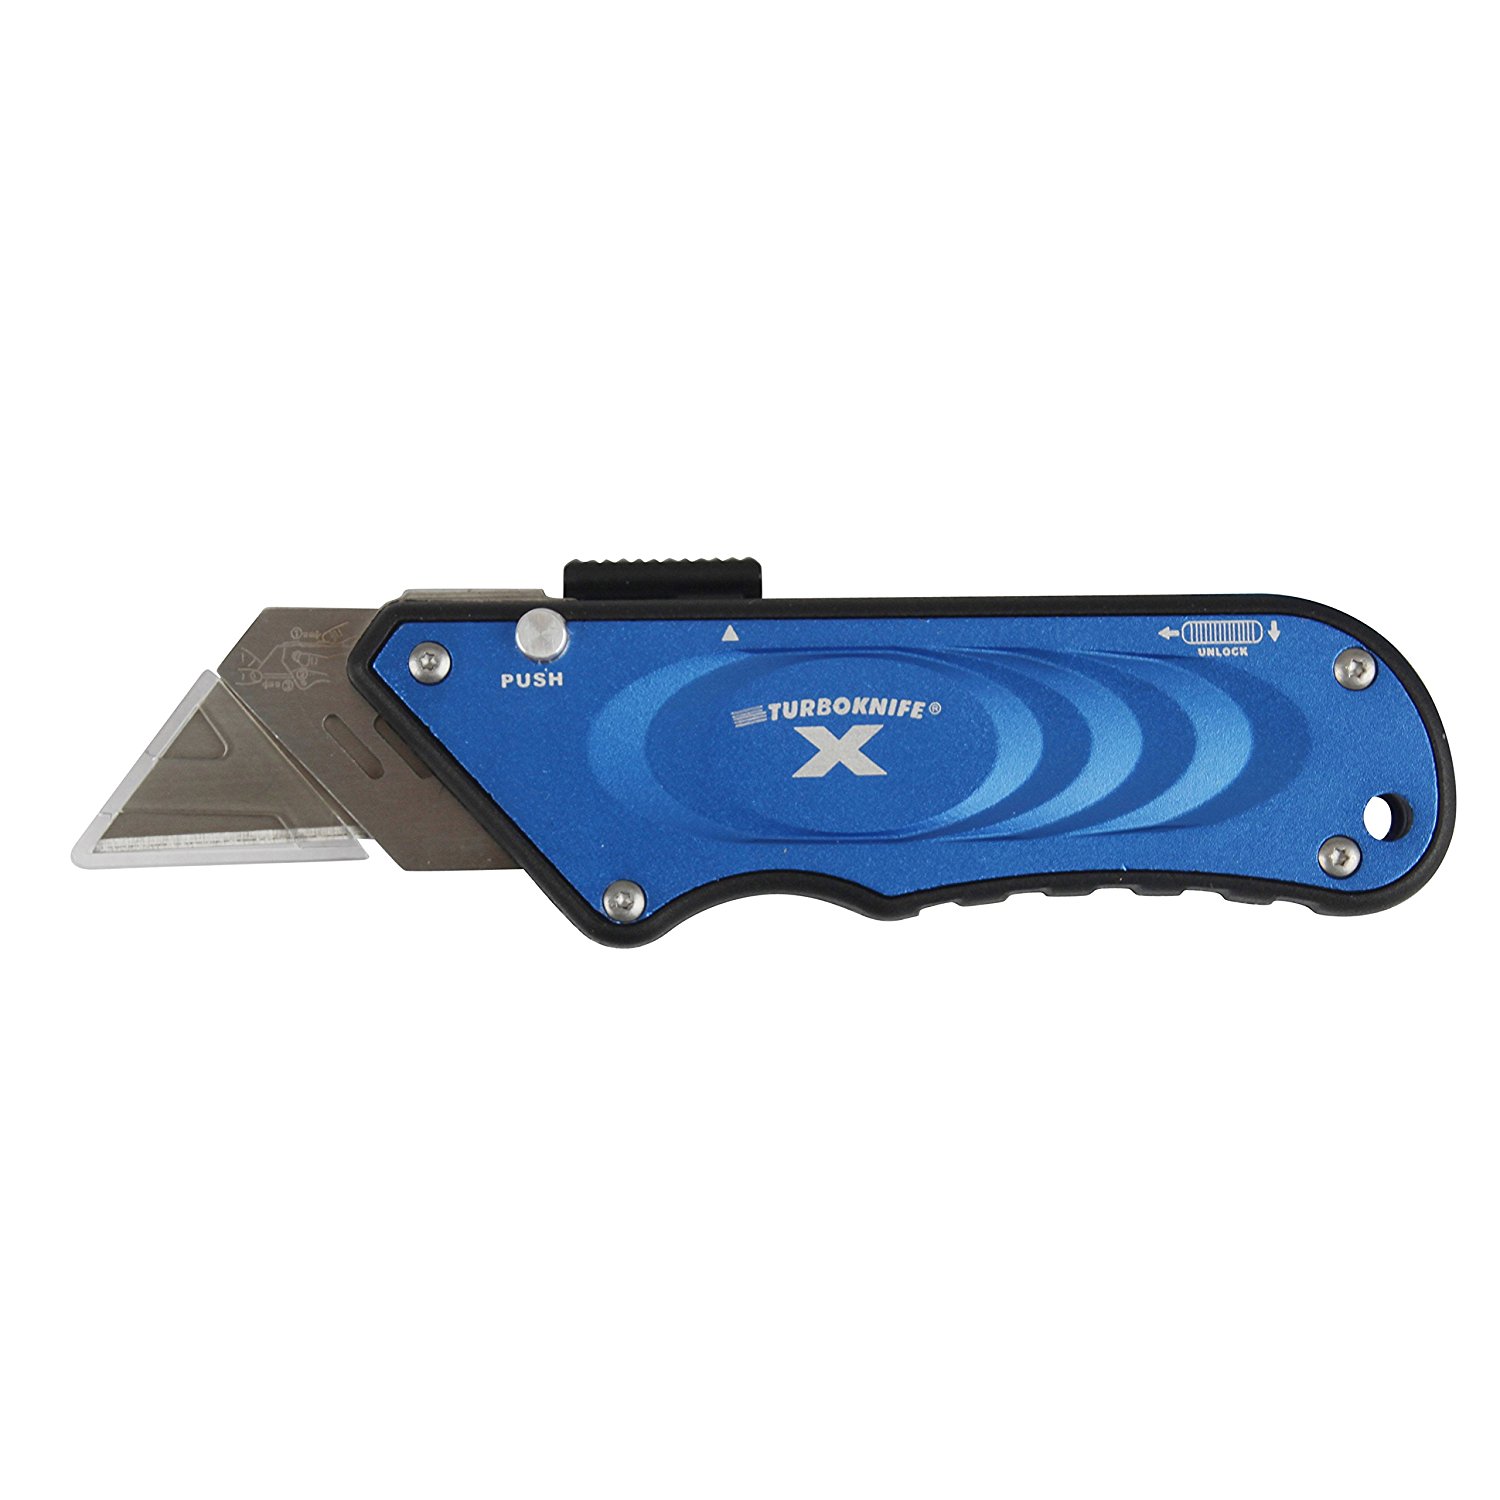 Olympia Tools 33-134 Turboknife by Blue - Utility Knives - Amazon.com